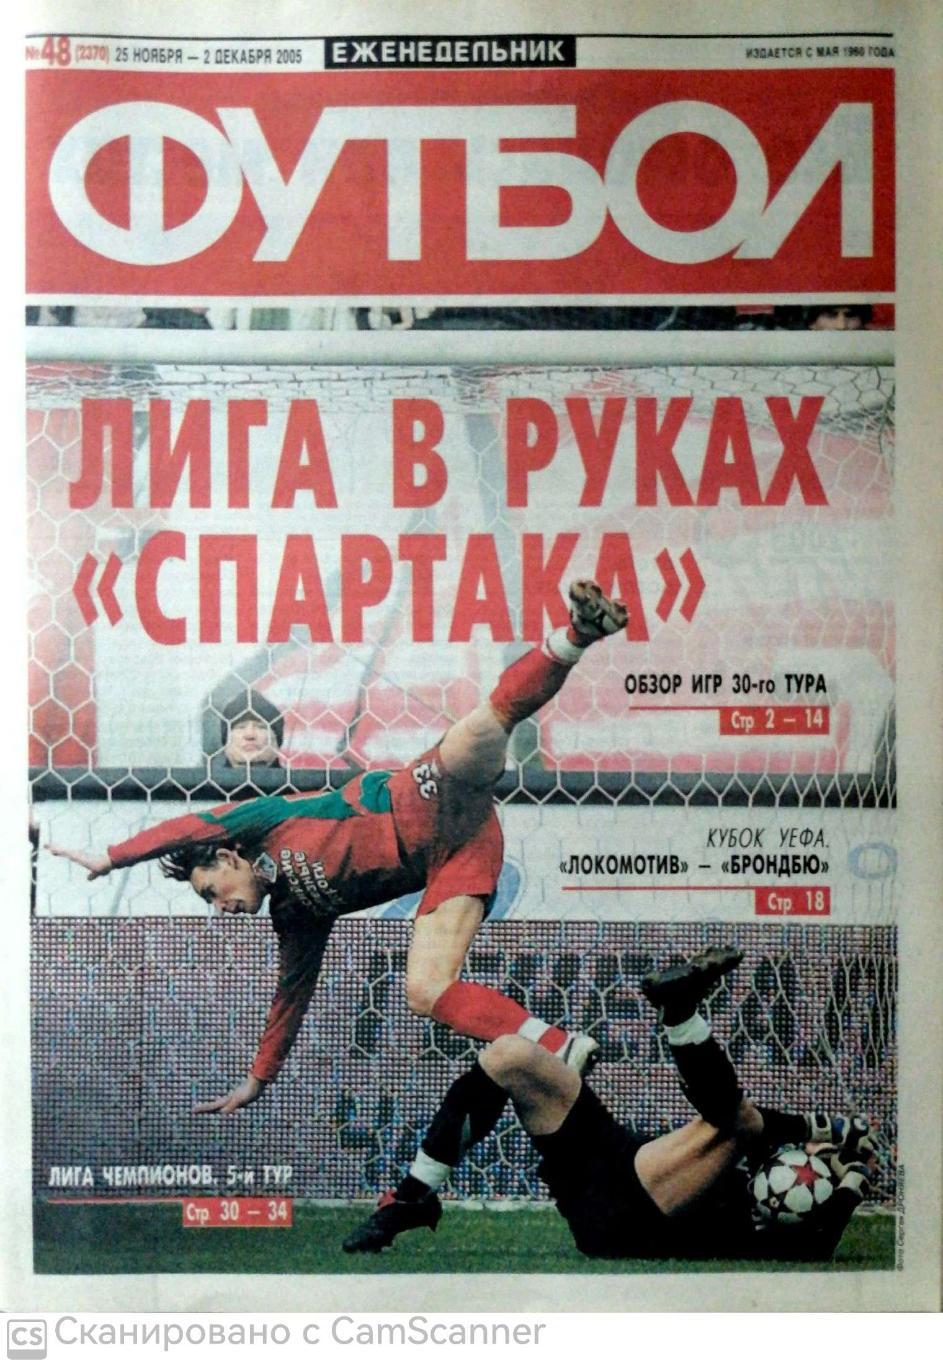 Еженедельник «Футбол» (Москва). 2005 год. №48